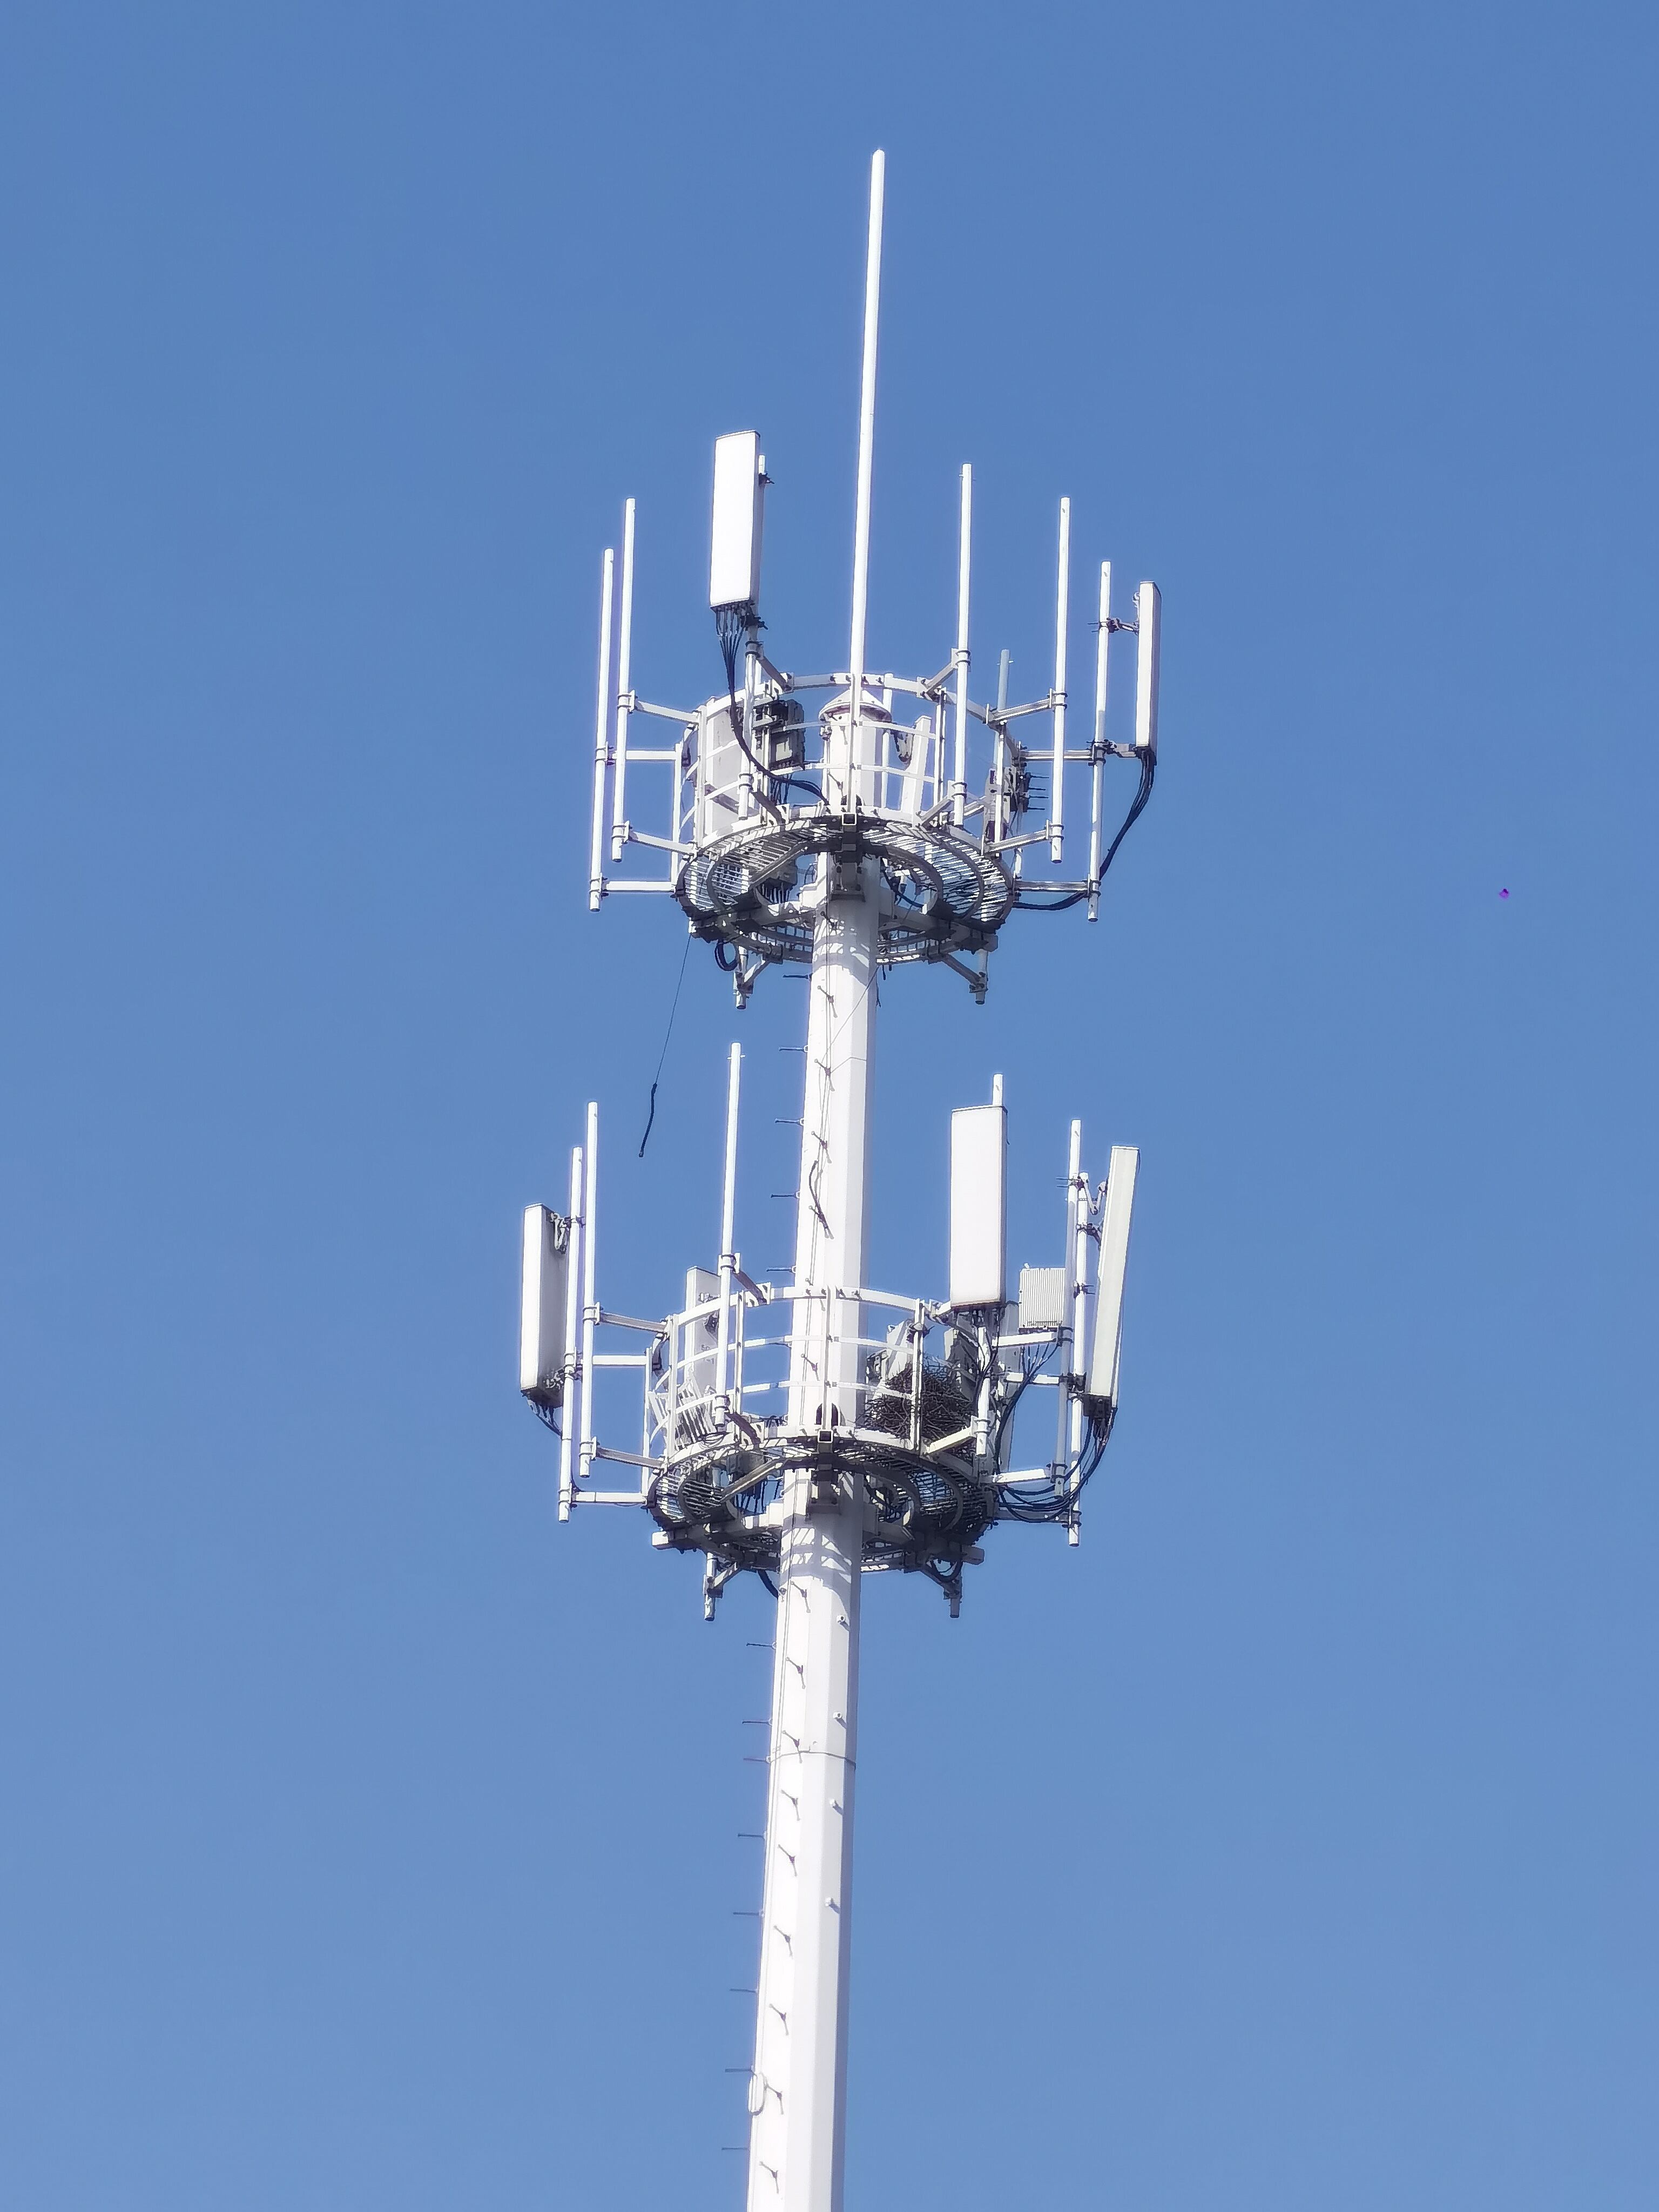 Monopole Tower Antenna Communication Transmission mea hoʻolako